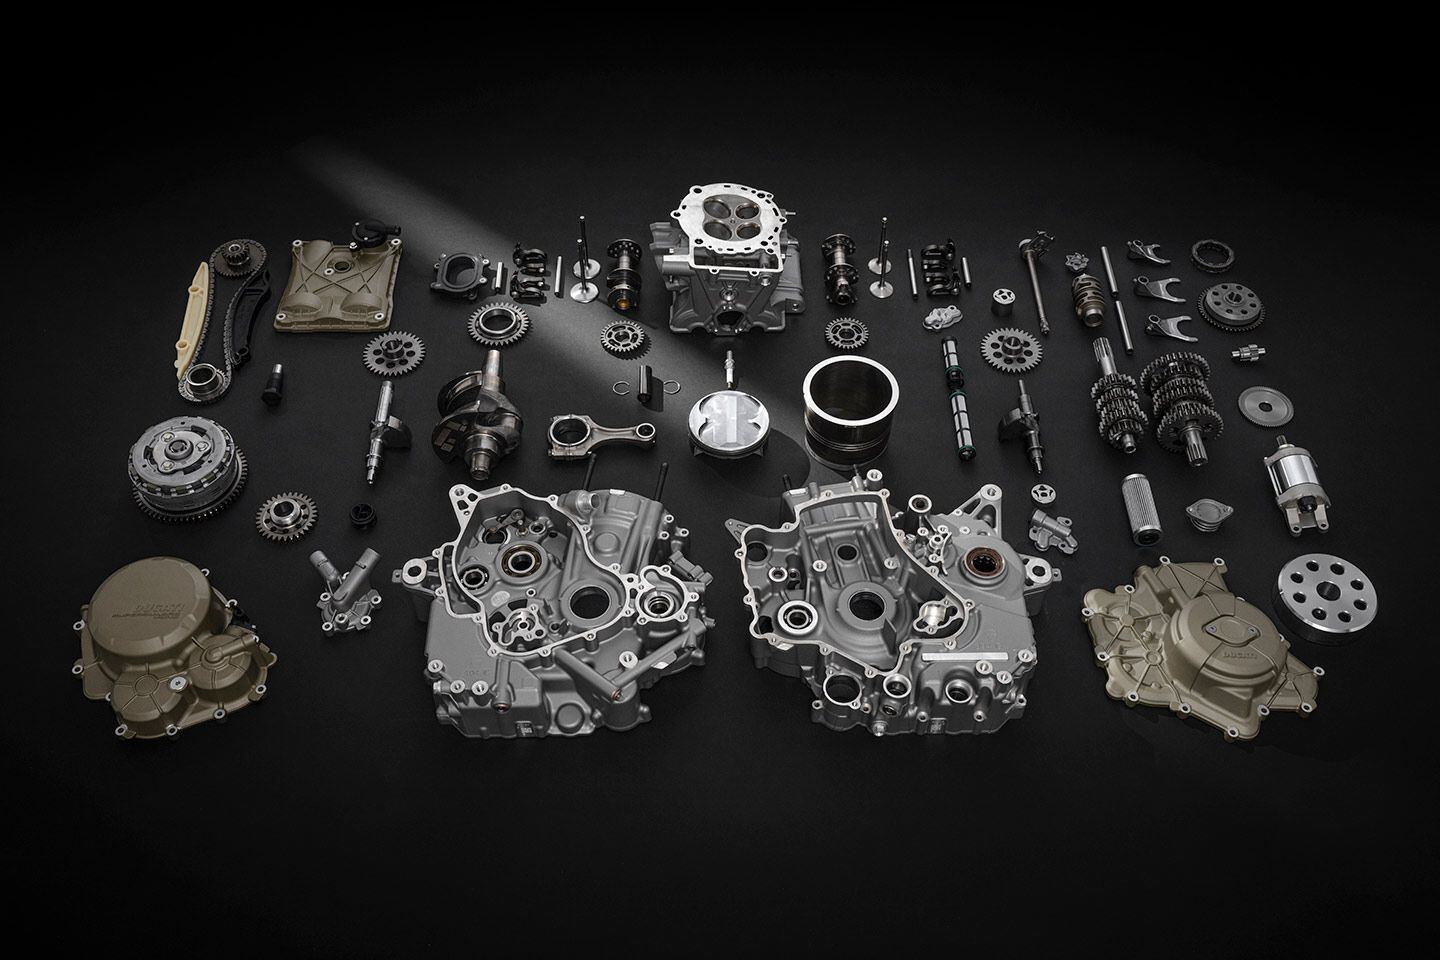 One piston, one rod, two balancers, and a desmo head—Ducati’s 659cc Superquadro Mono engine creates a claimed 77 hp.